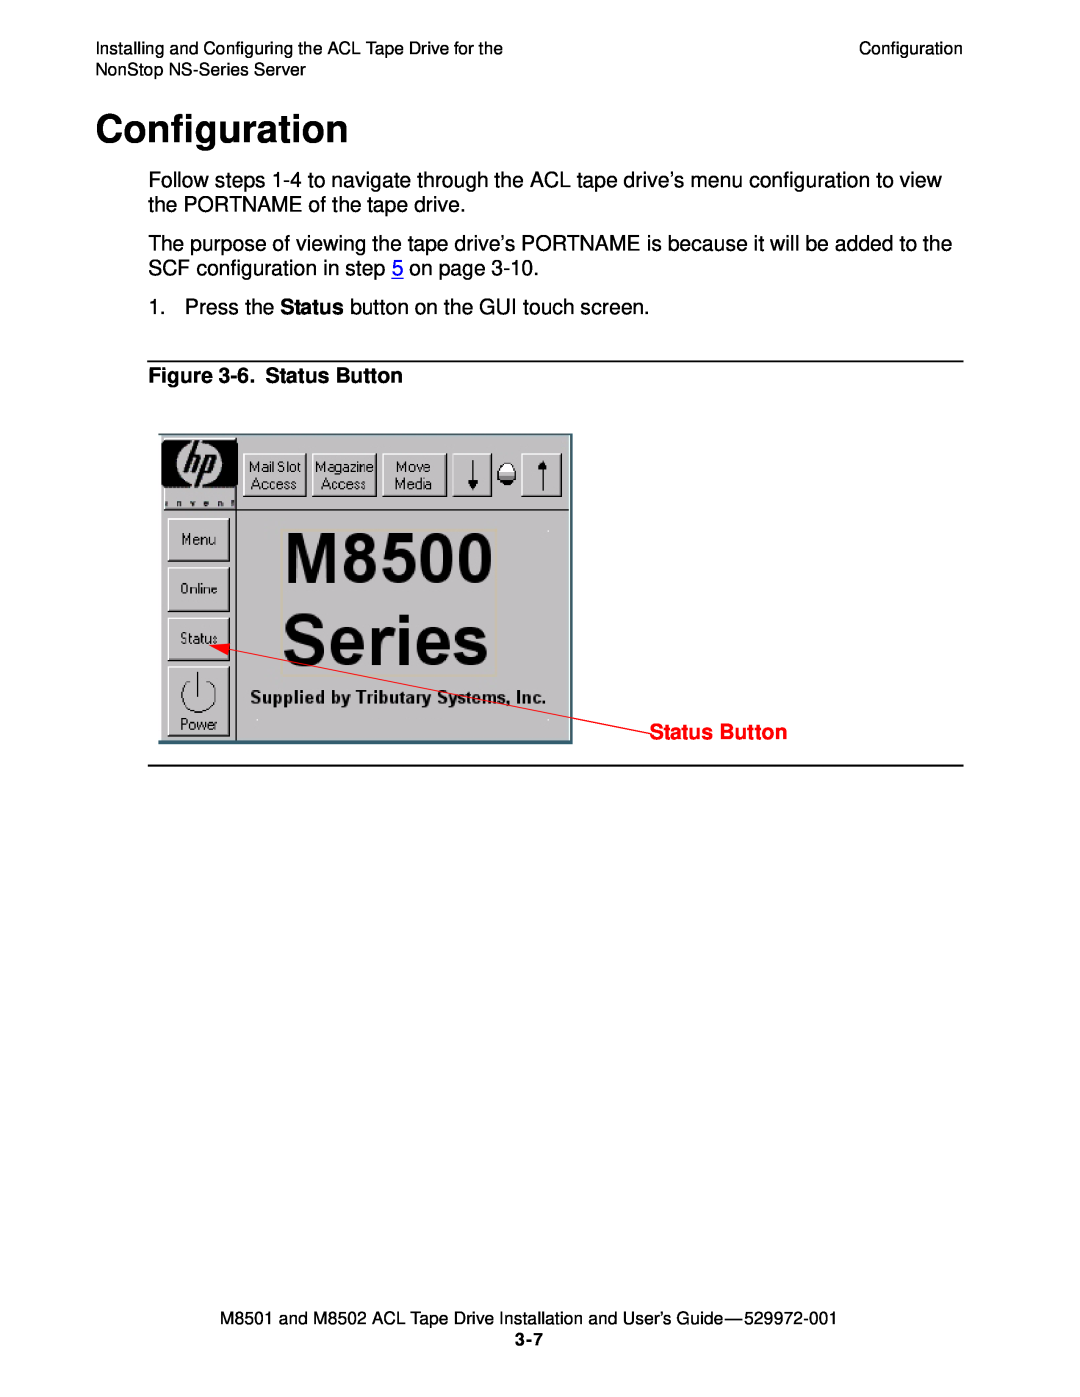 SMC Networks M8501 manual Configuration, 6. Status Button 